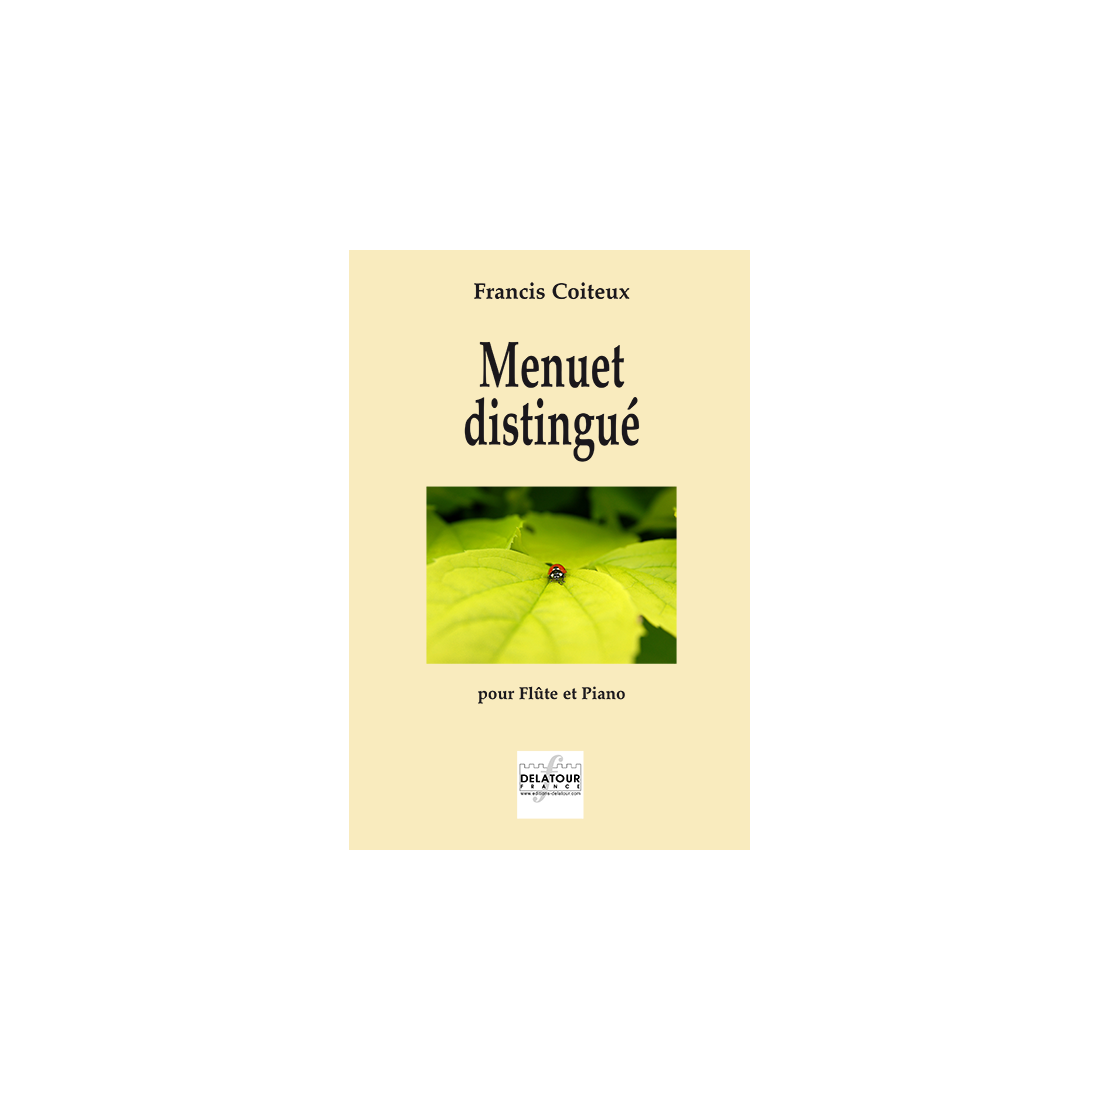 Menuet distingué for flute and piano